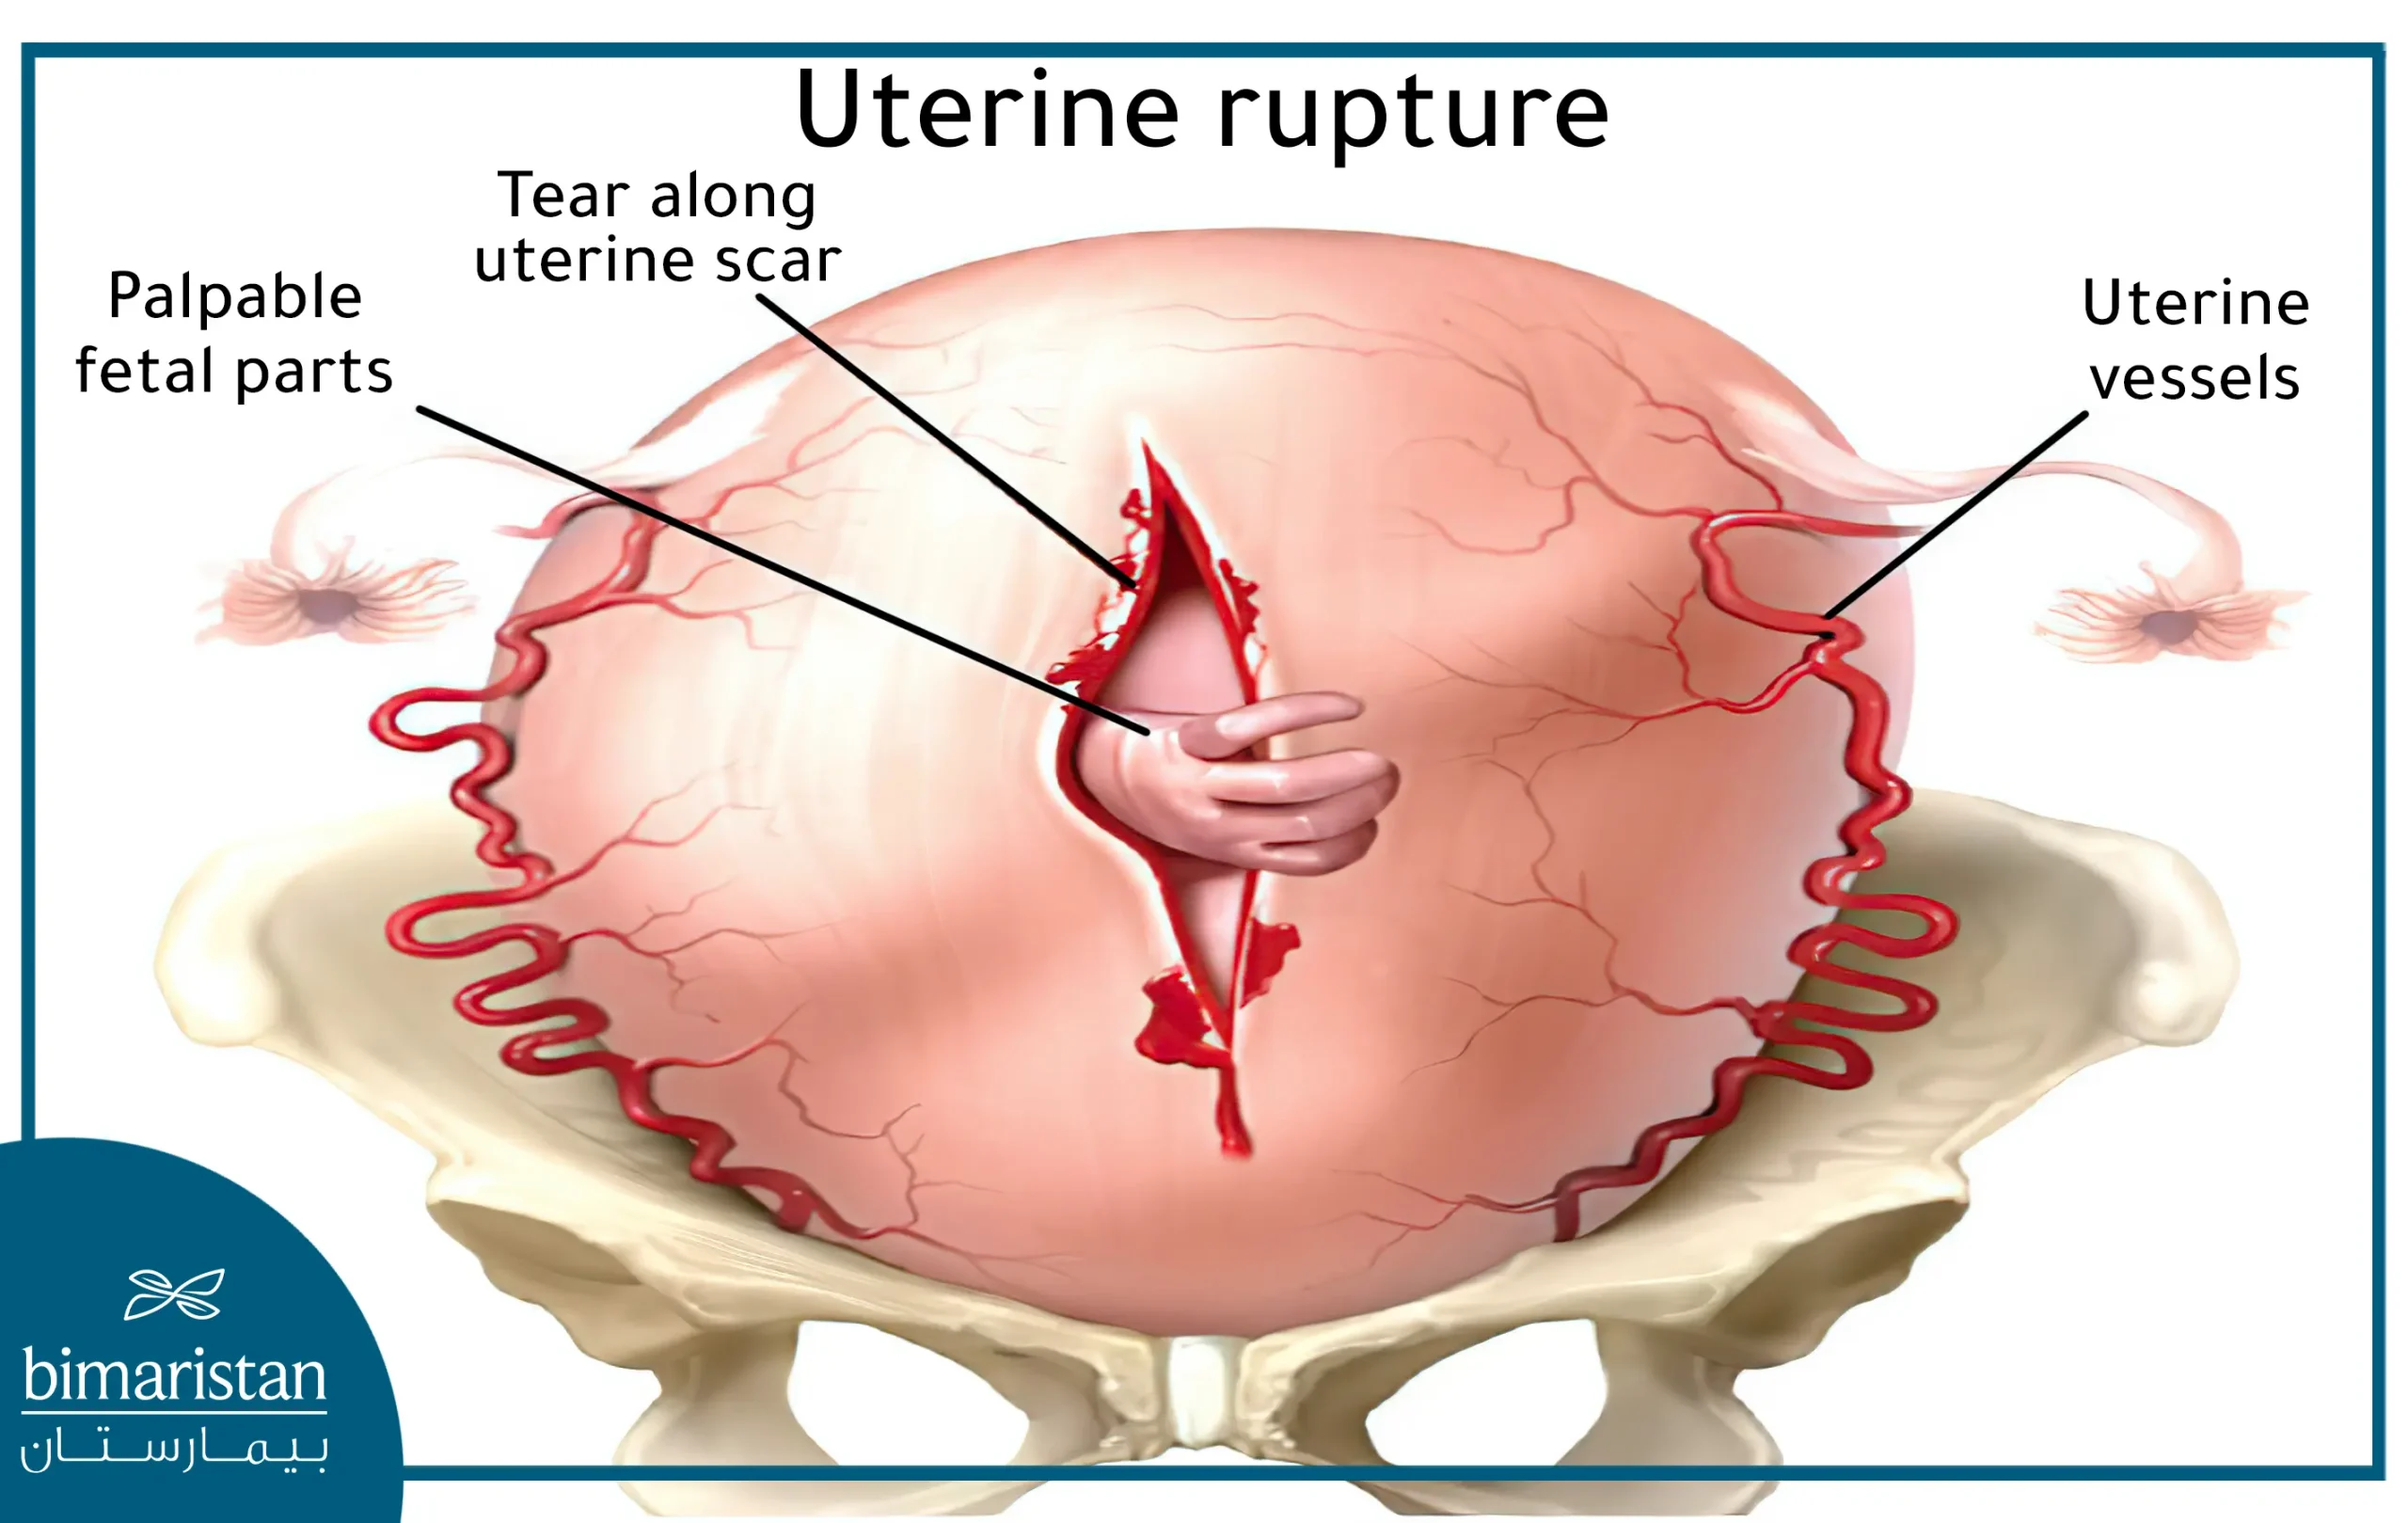 most common sign of uterine rupture